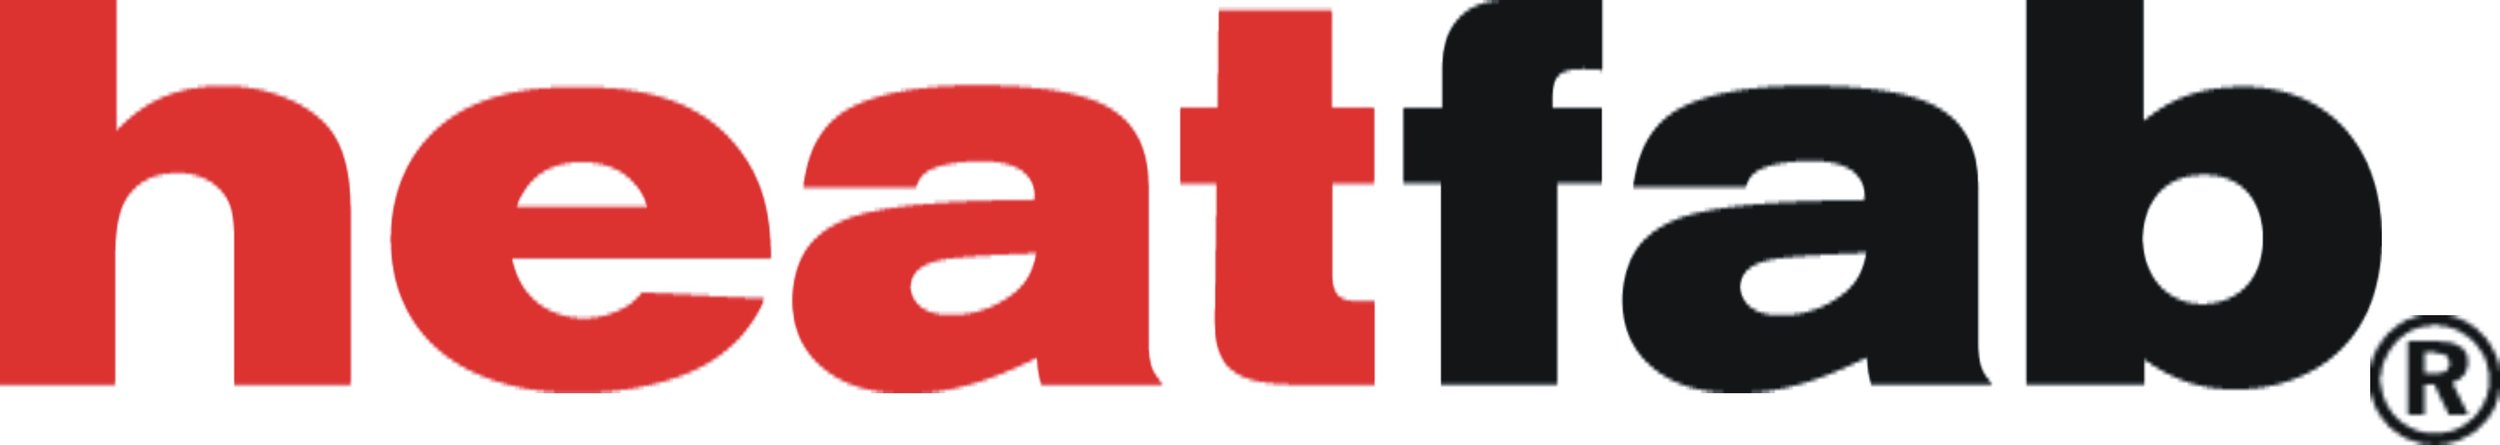 Heatfab Logo.jpg